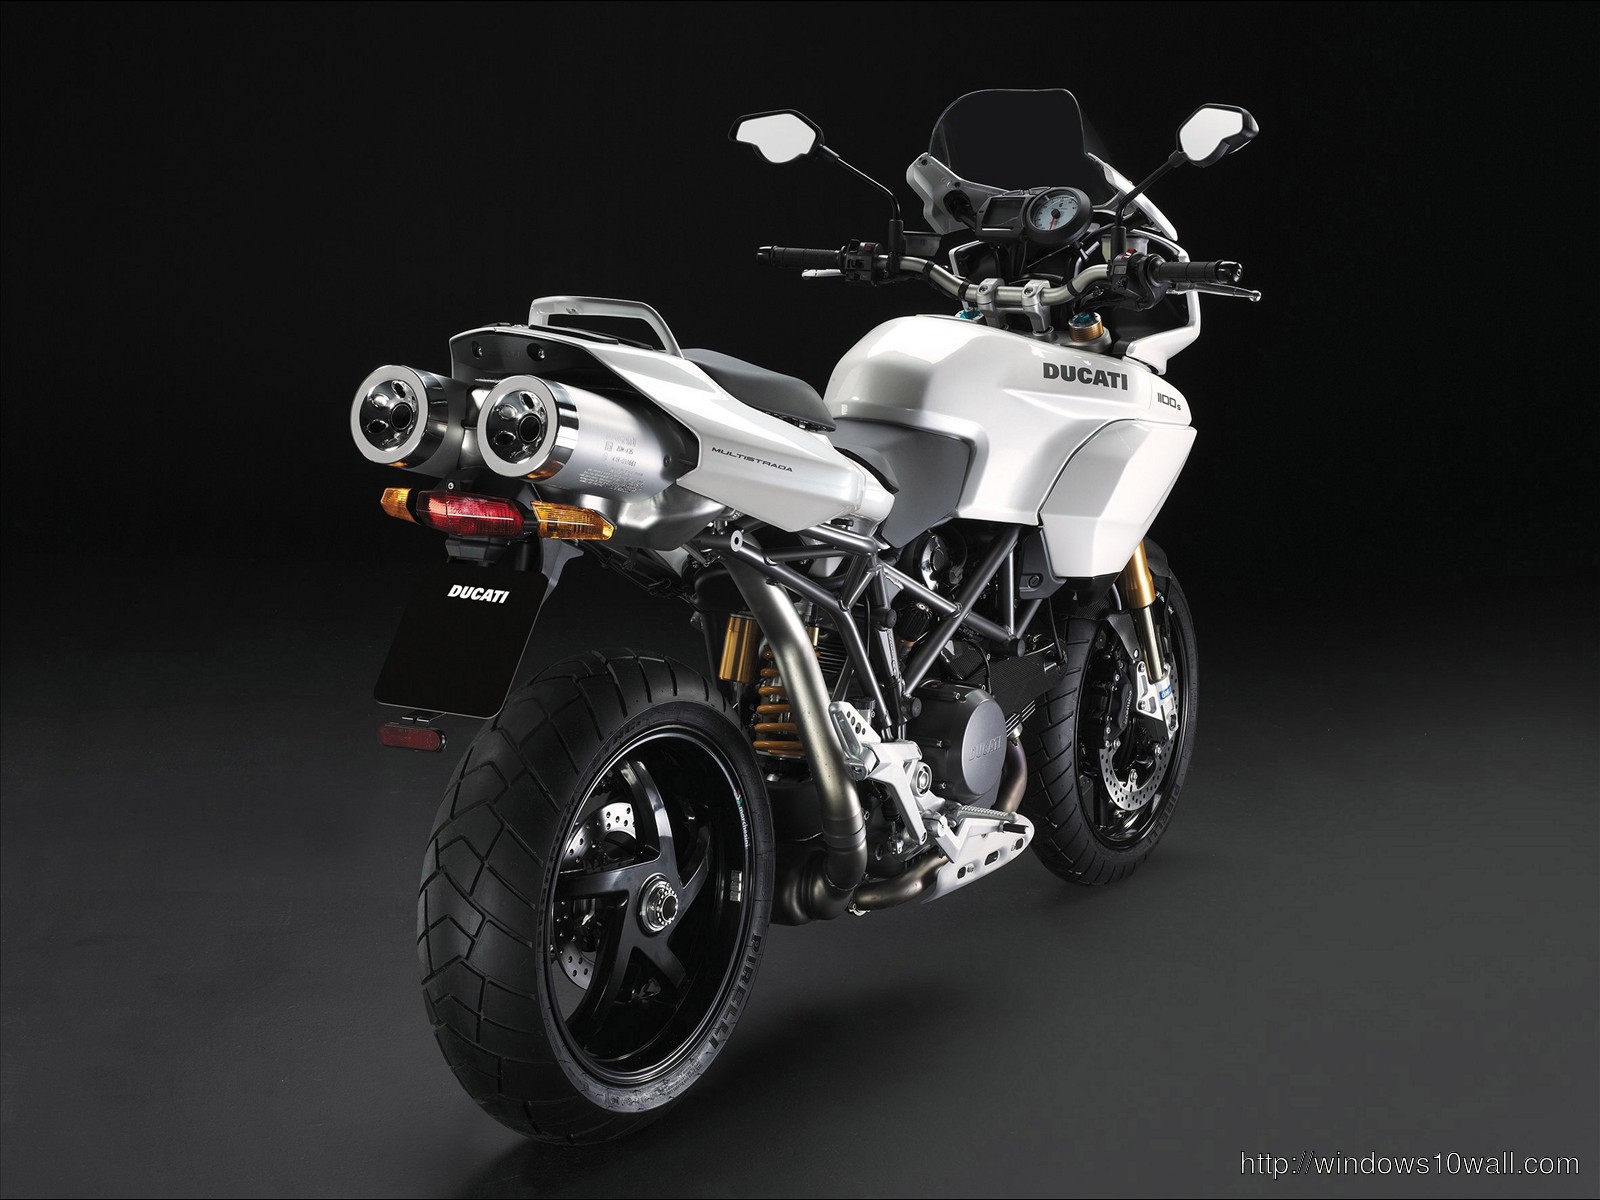 Ducati New Pearl White Livery Bike Wallpaper